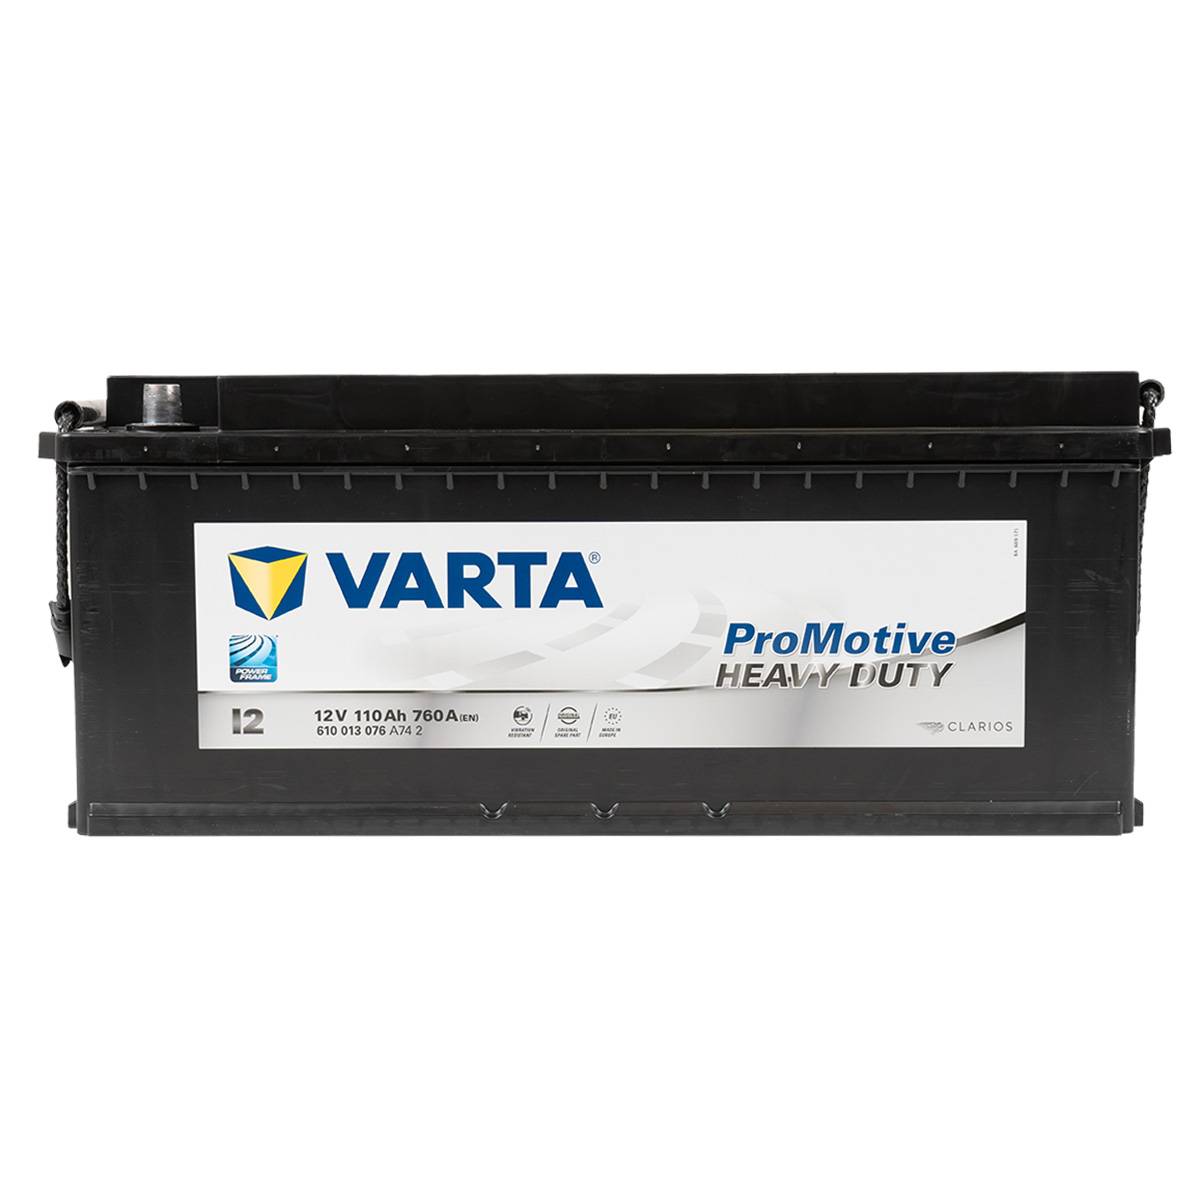 VARTA I2 ProMotive Heavy Duty 12V 110Ah 760A LKW Batterie 610 013 076